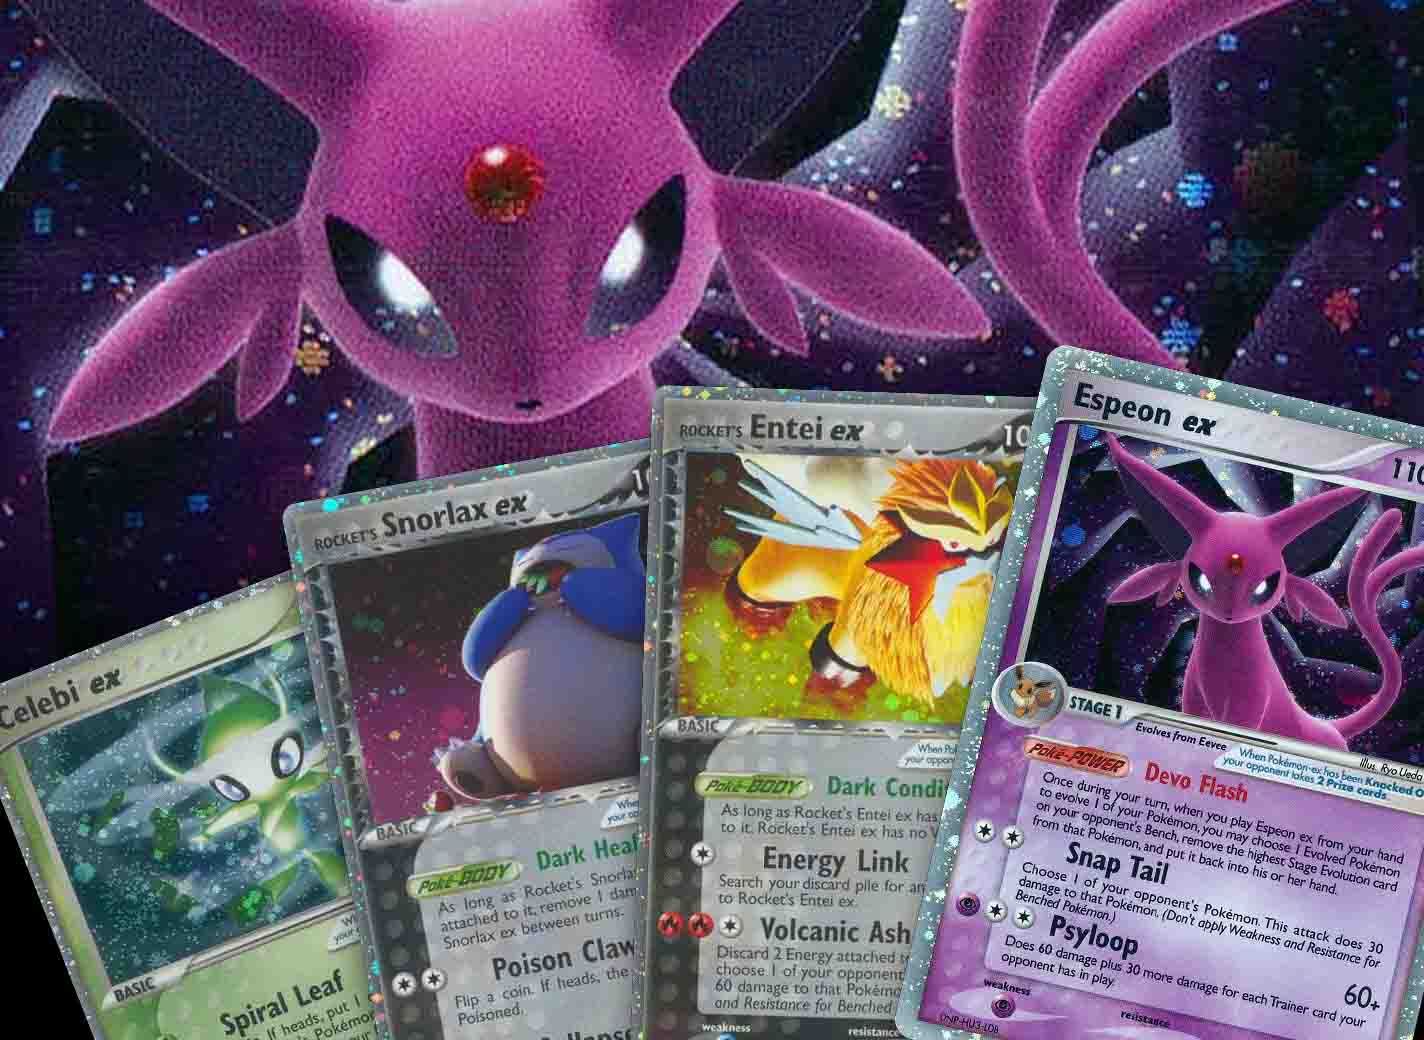 Carta Pokémon Zekrom EX (IT) - Vinted